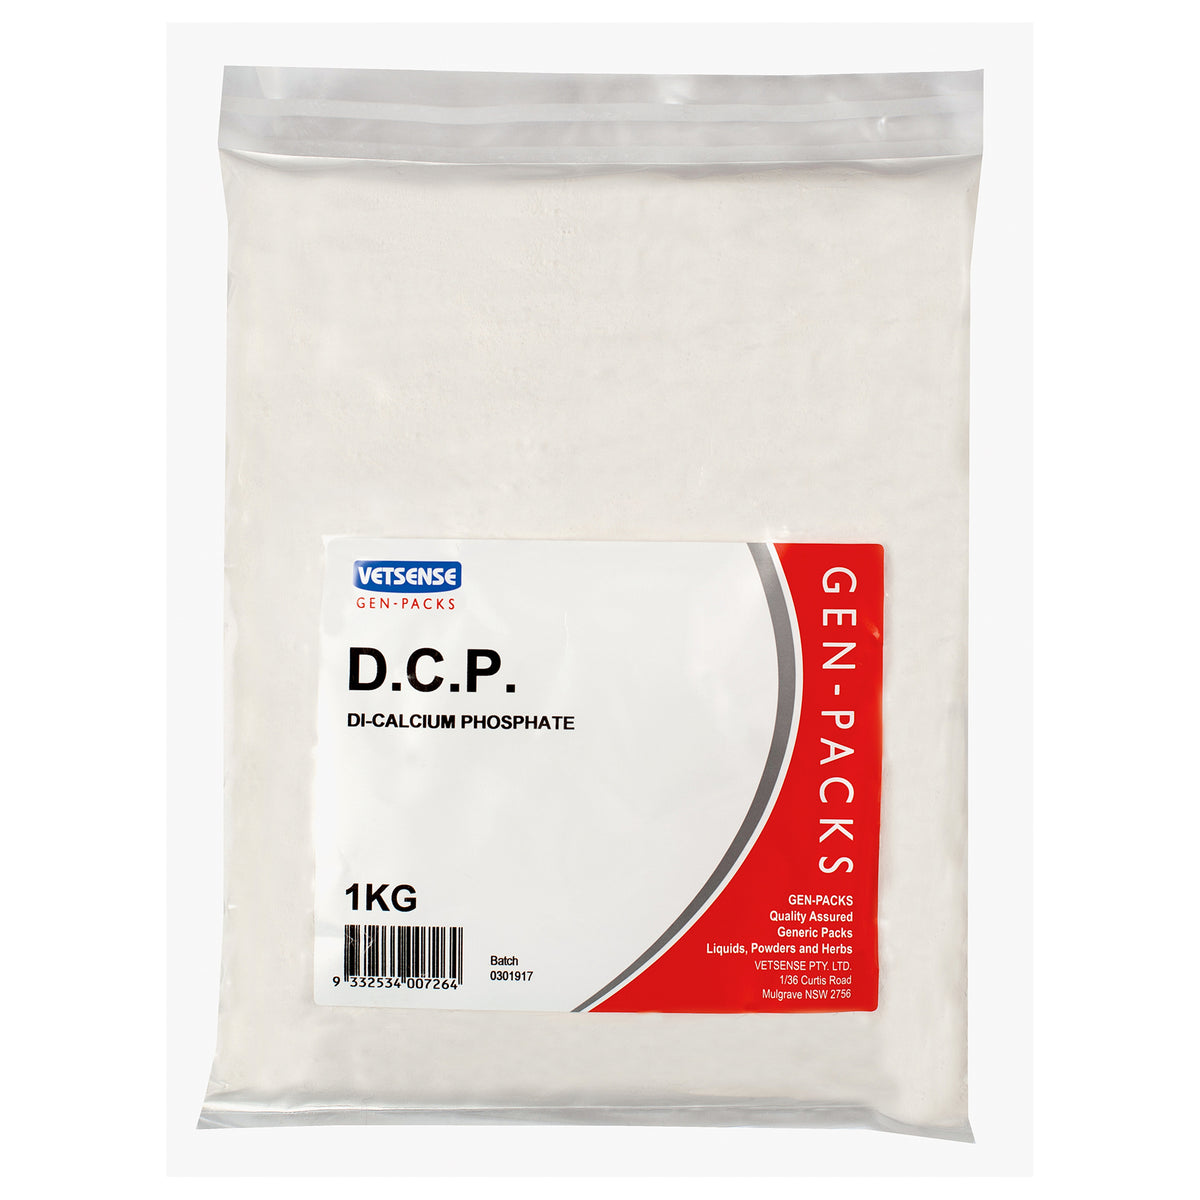 Vetsense Gen Packs DCP (Di Calcium Phosphate)